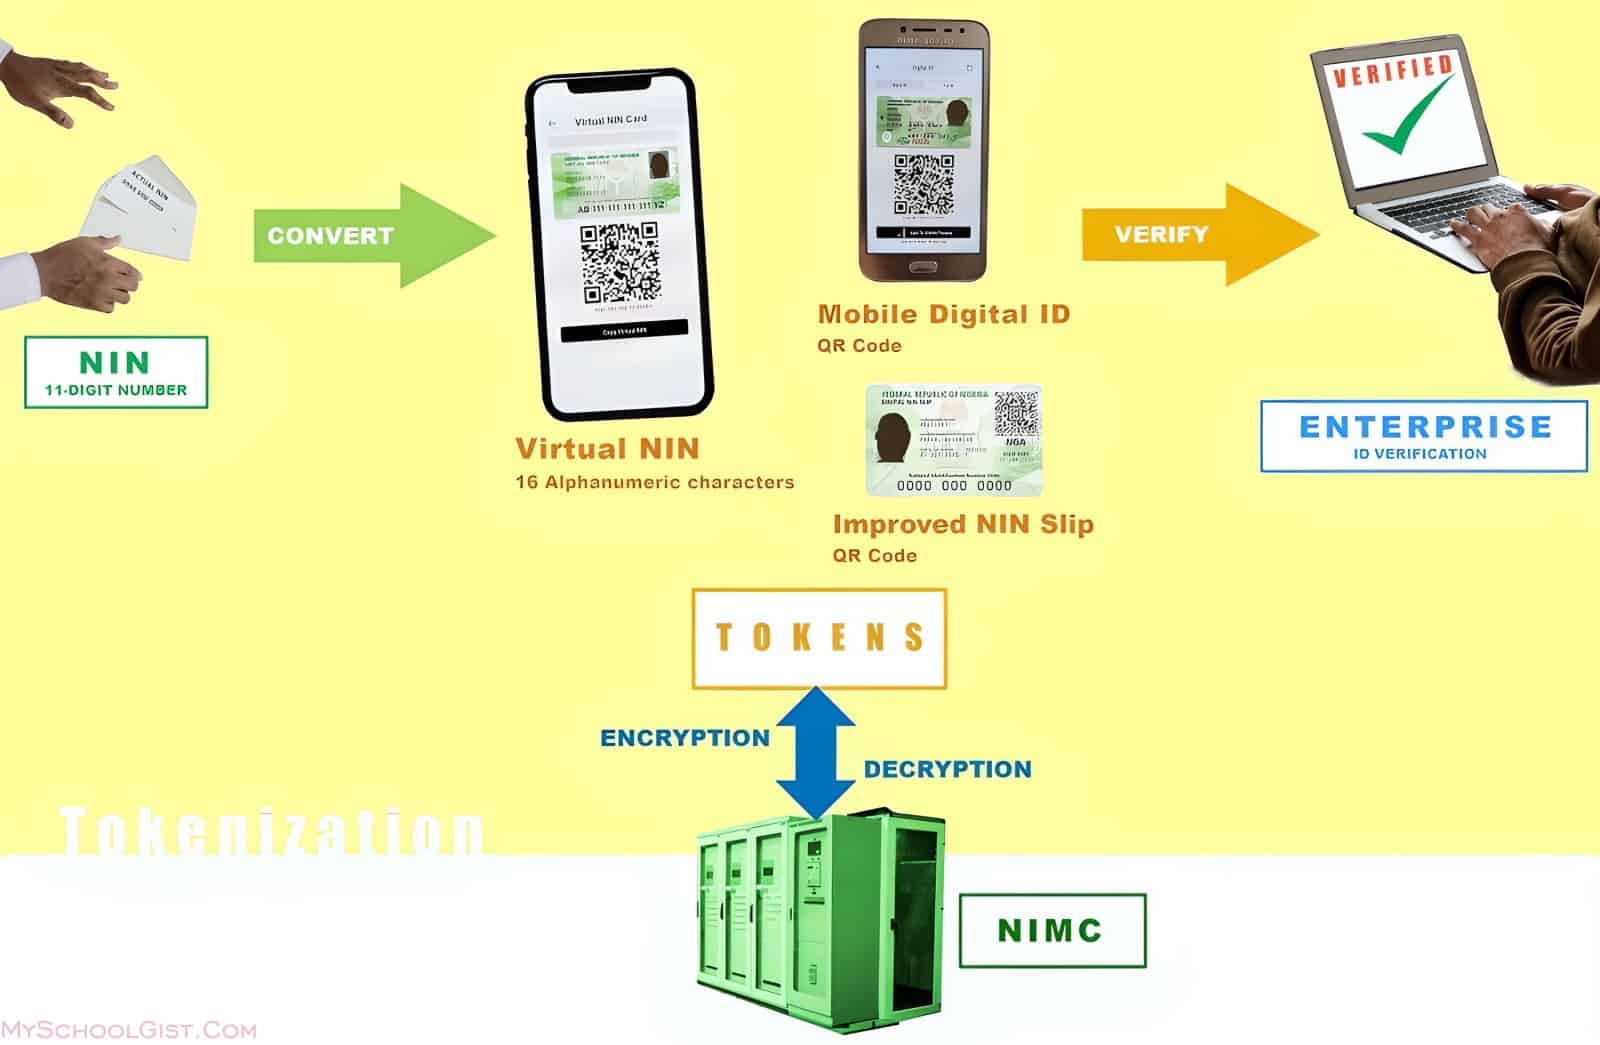 How to Register for NIMC Mobile App